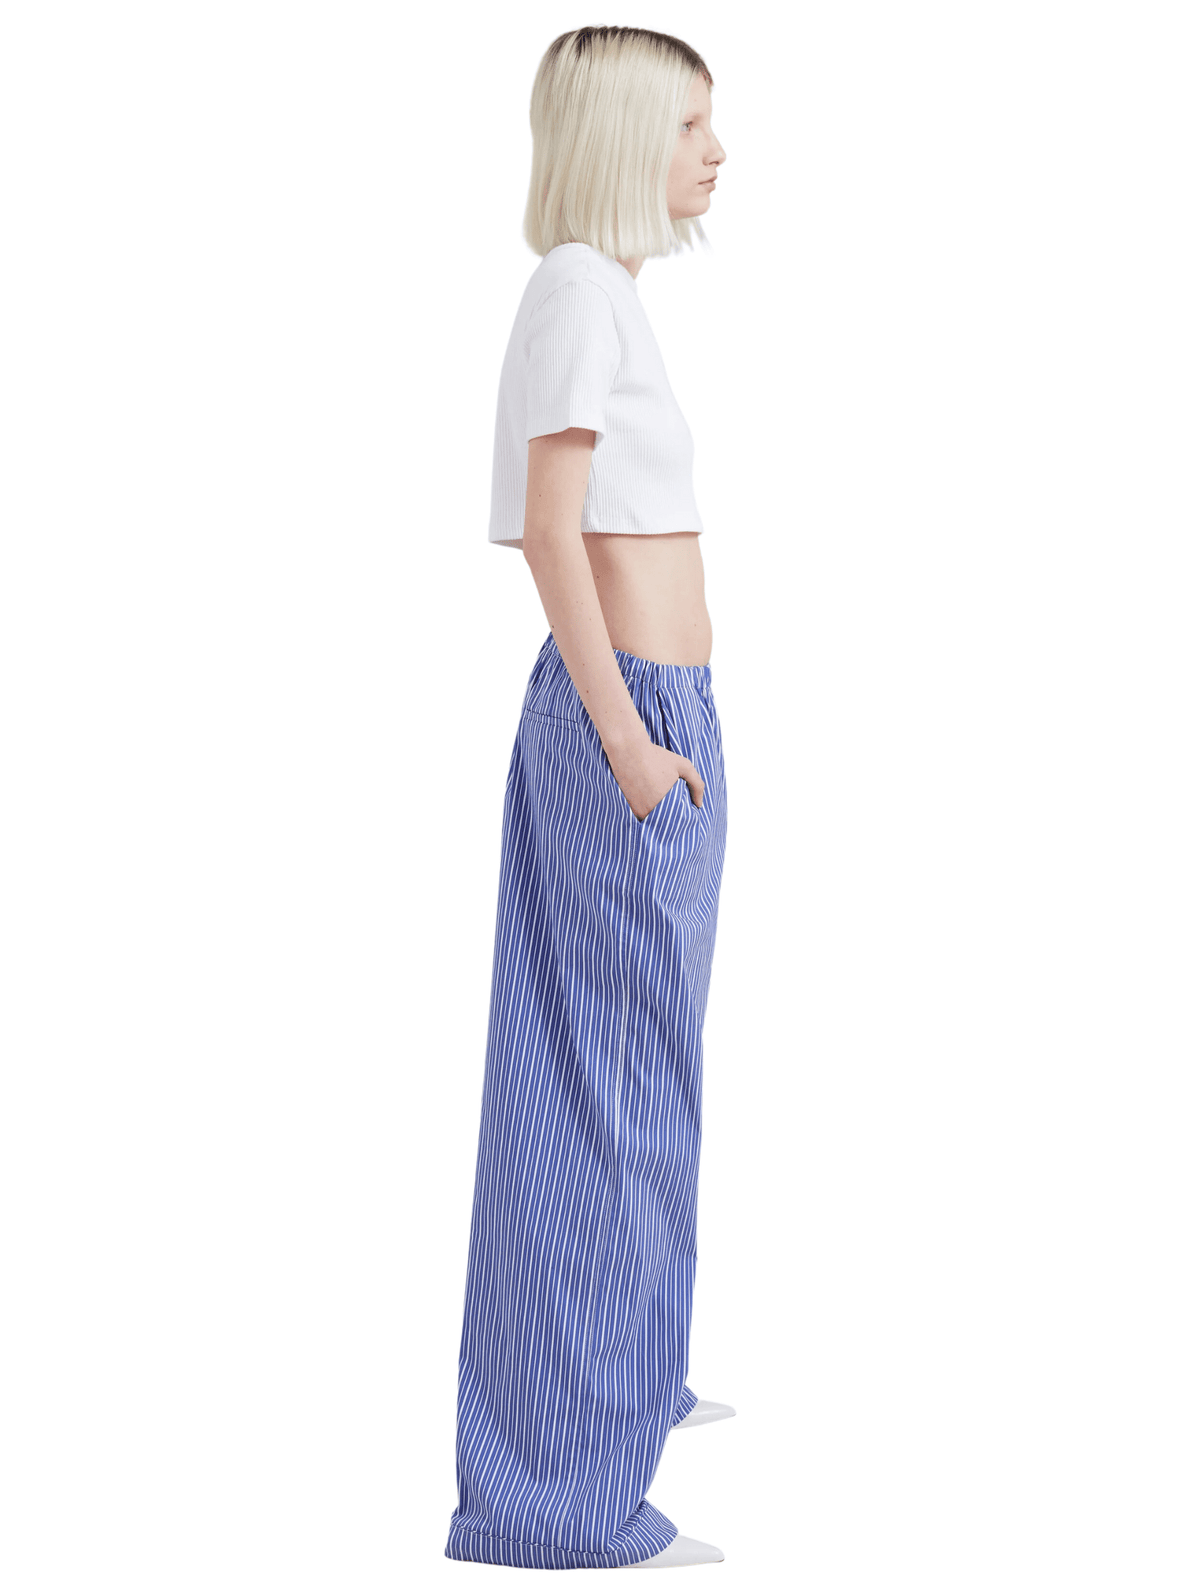 Mirca Elastic Pants / Blue Multi Stripe Womens Frankie Shop 